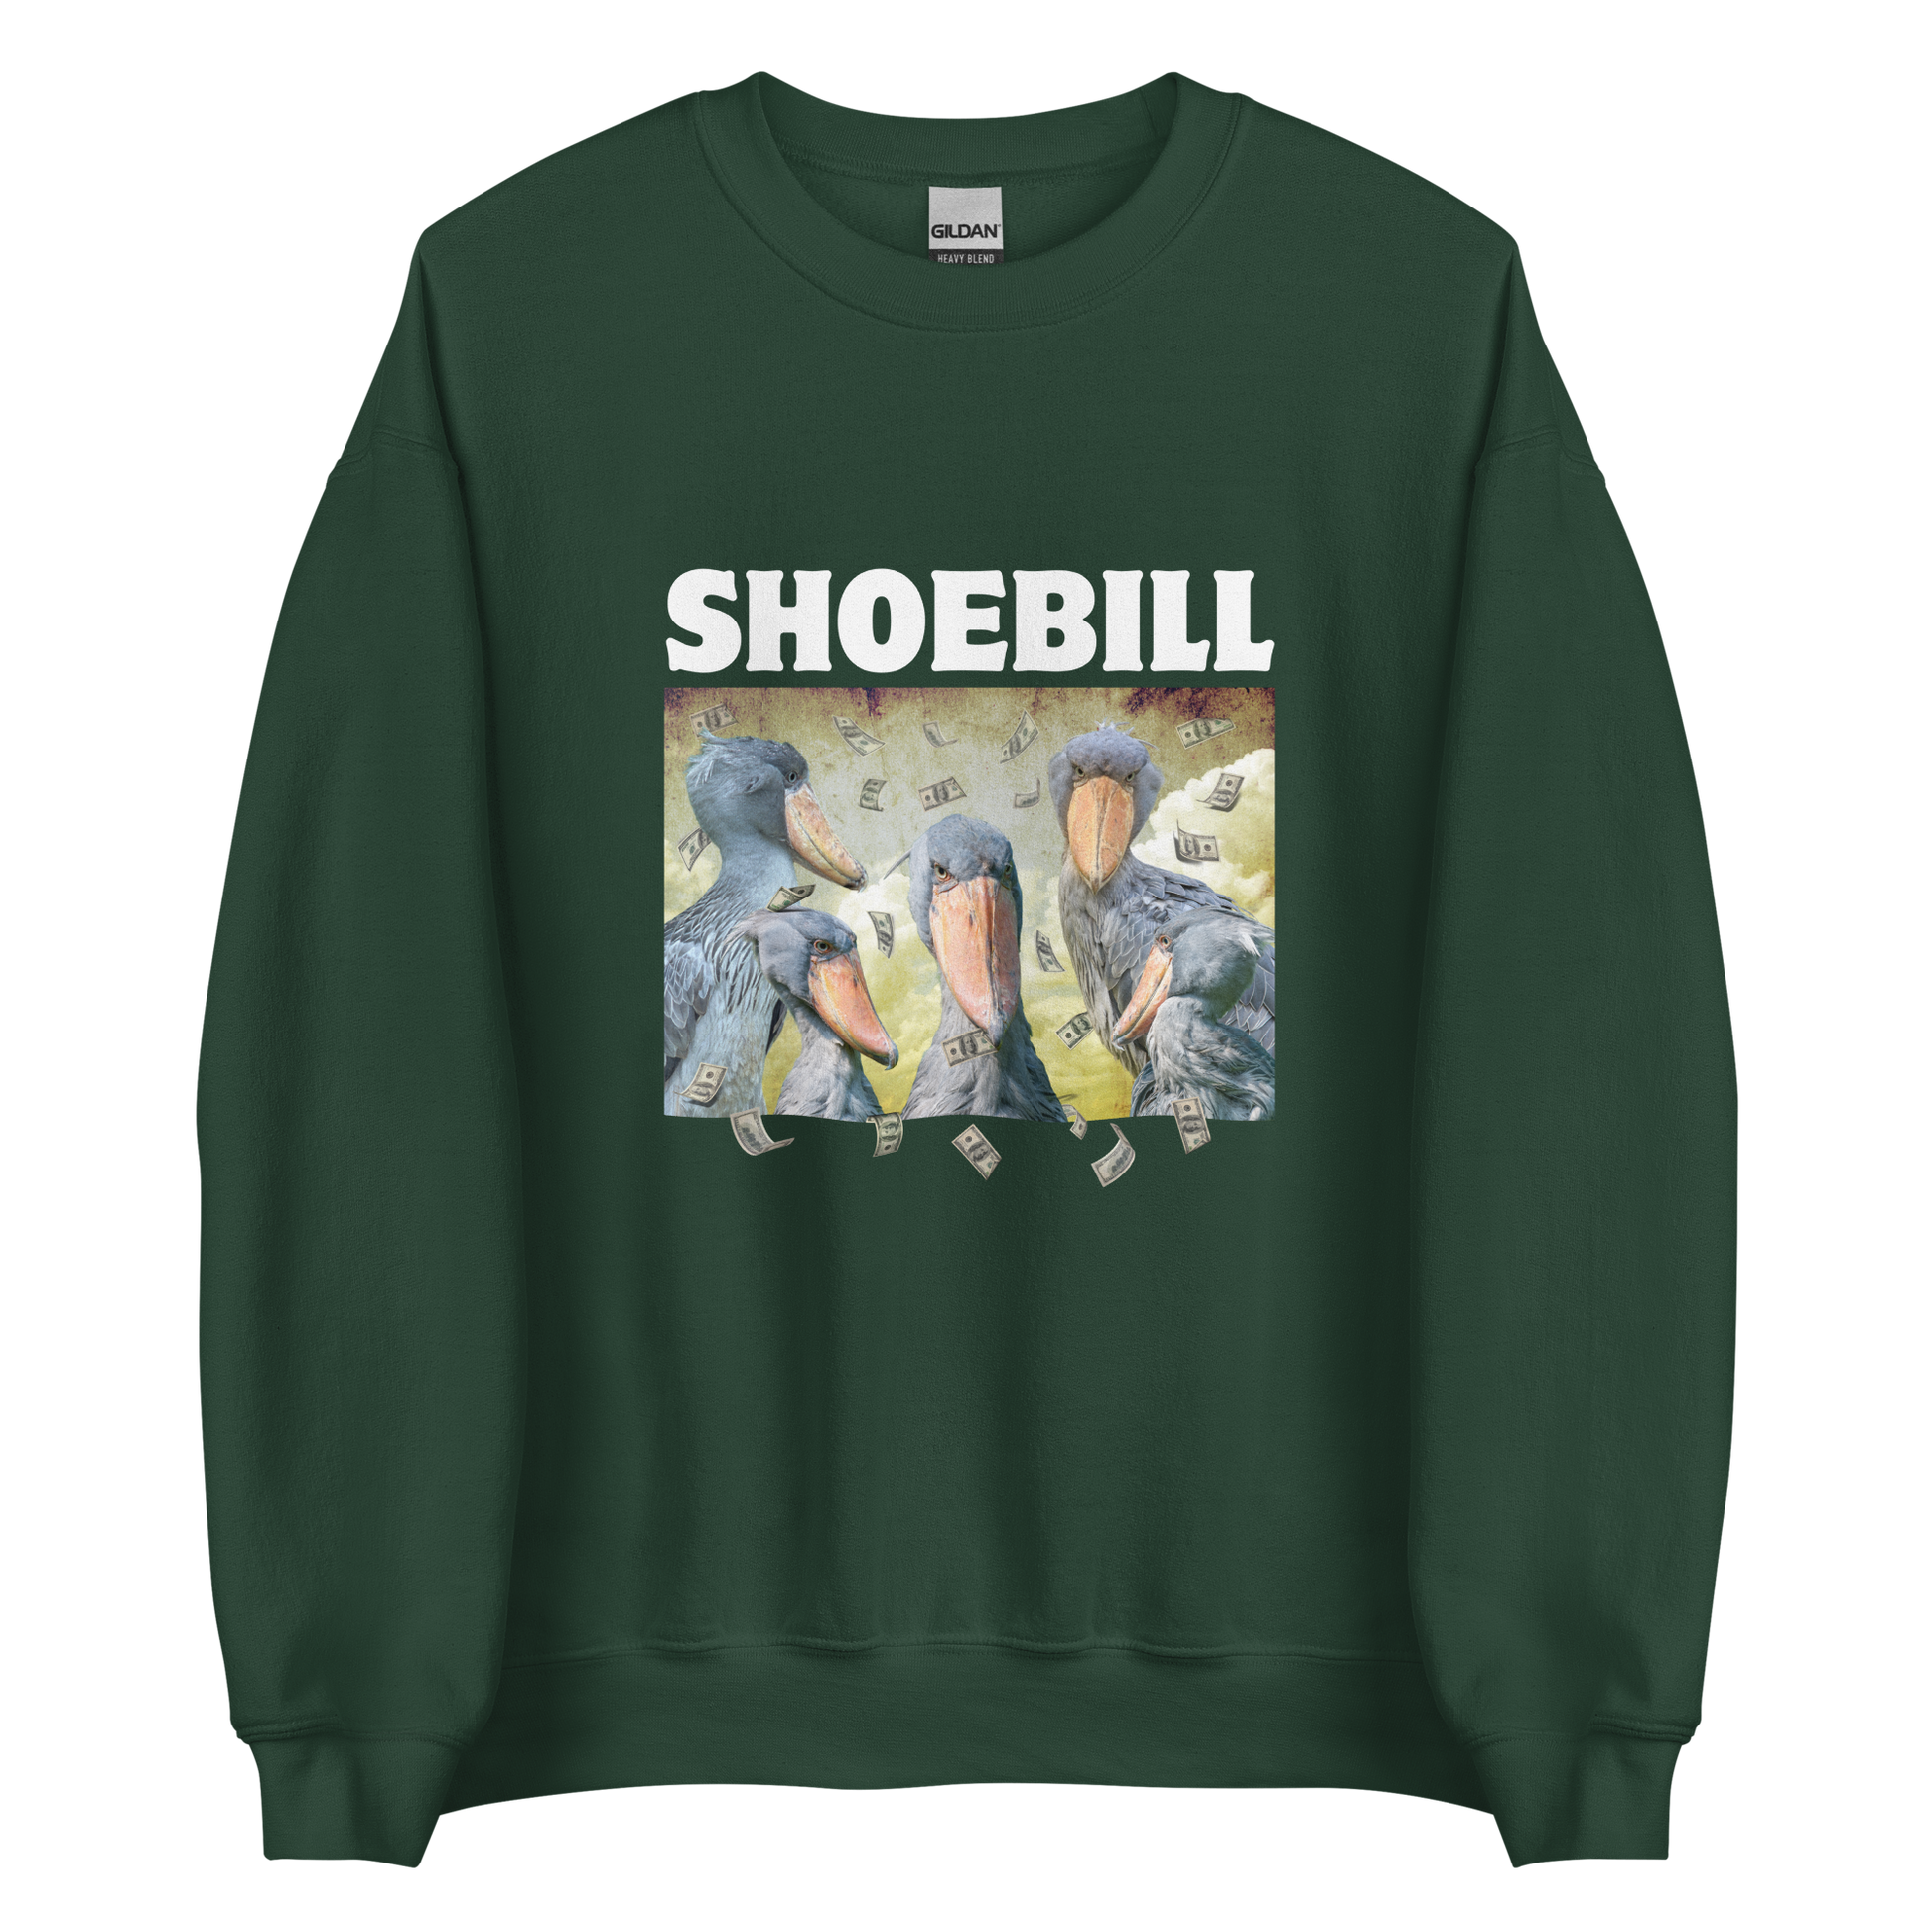 Forest Green Shoebill Sweatshirt featuring a cool Shoebill graphic on the chest - Artsy/Funny Graphic Shoebill Stork Sweatshirts - Boozy Fox